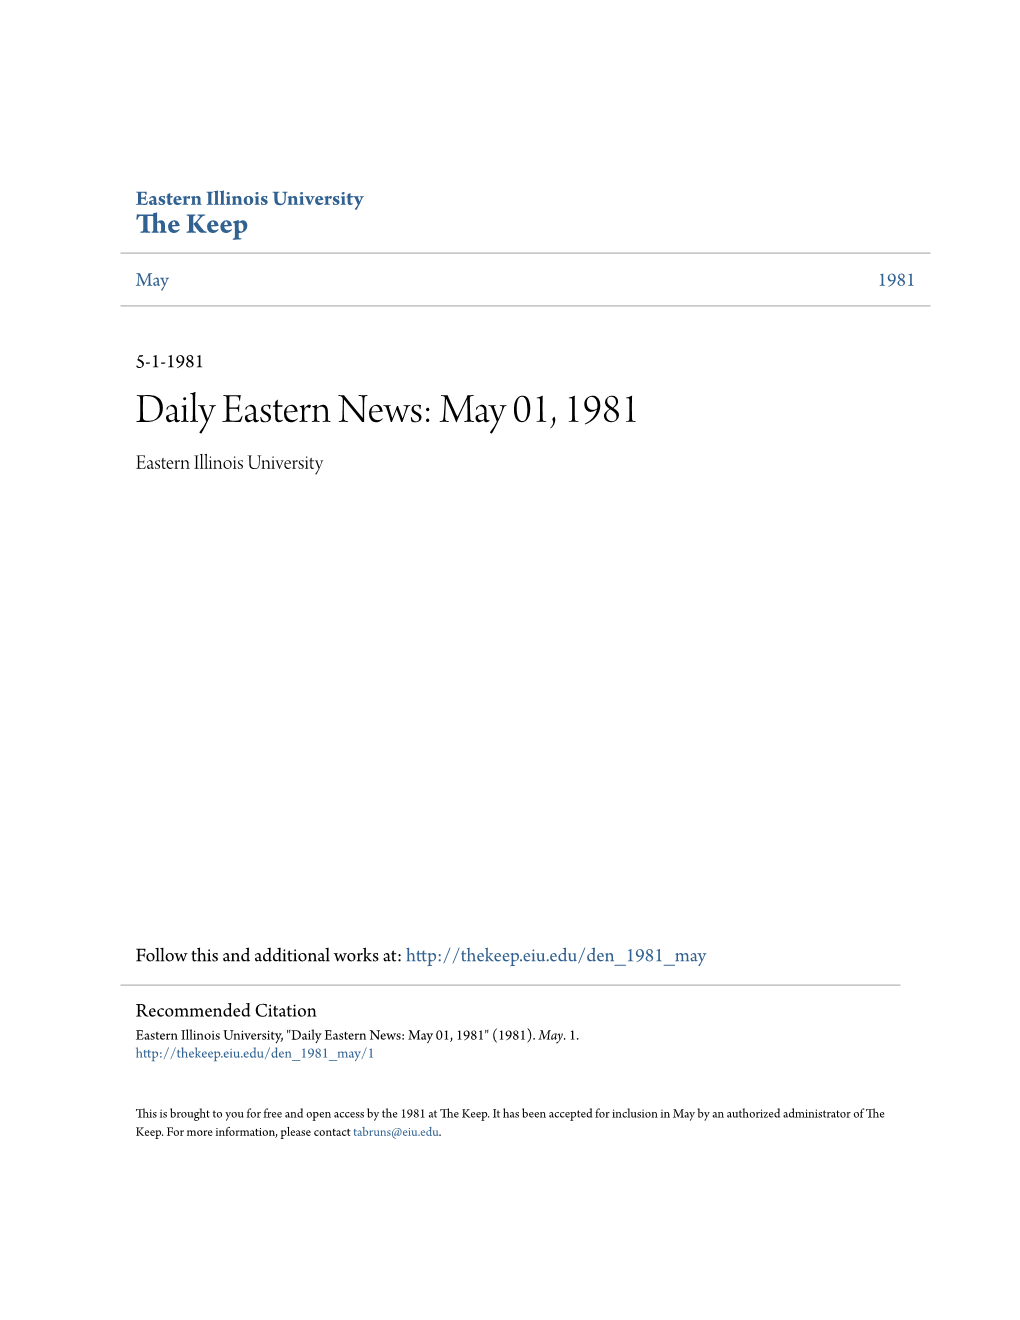 Eastern News: May 01, 1981 Eastern Illinois University